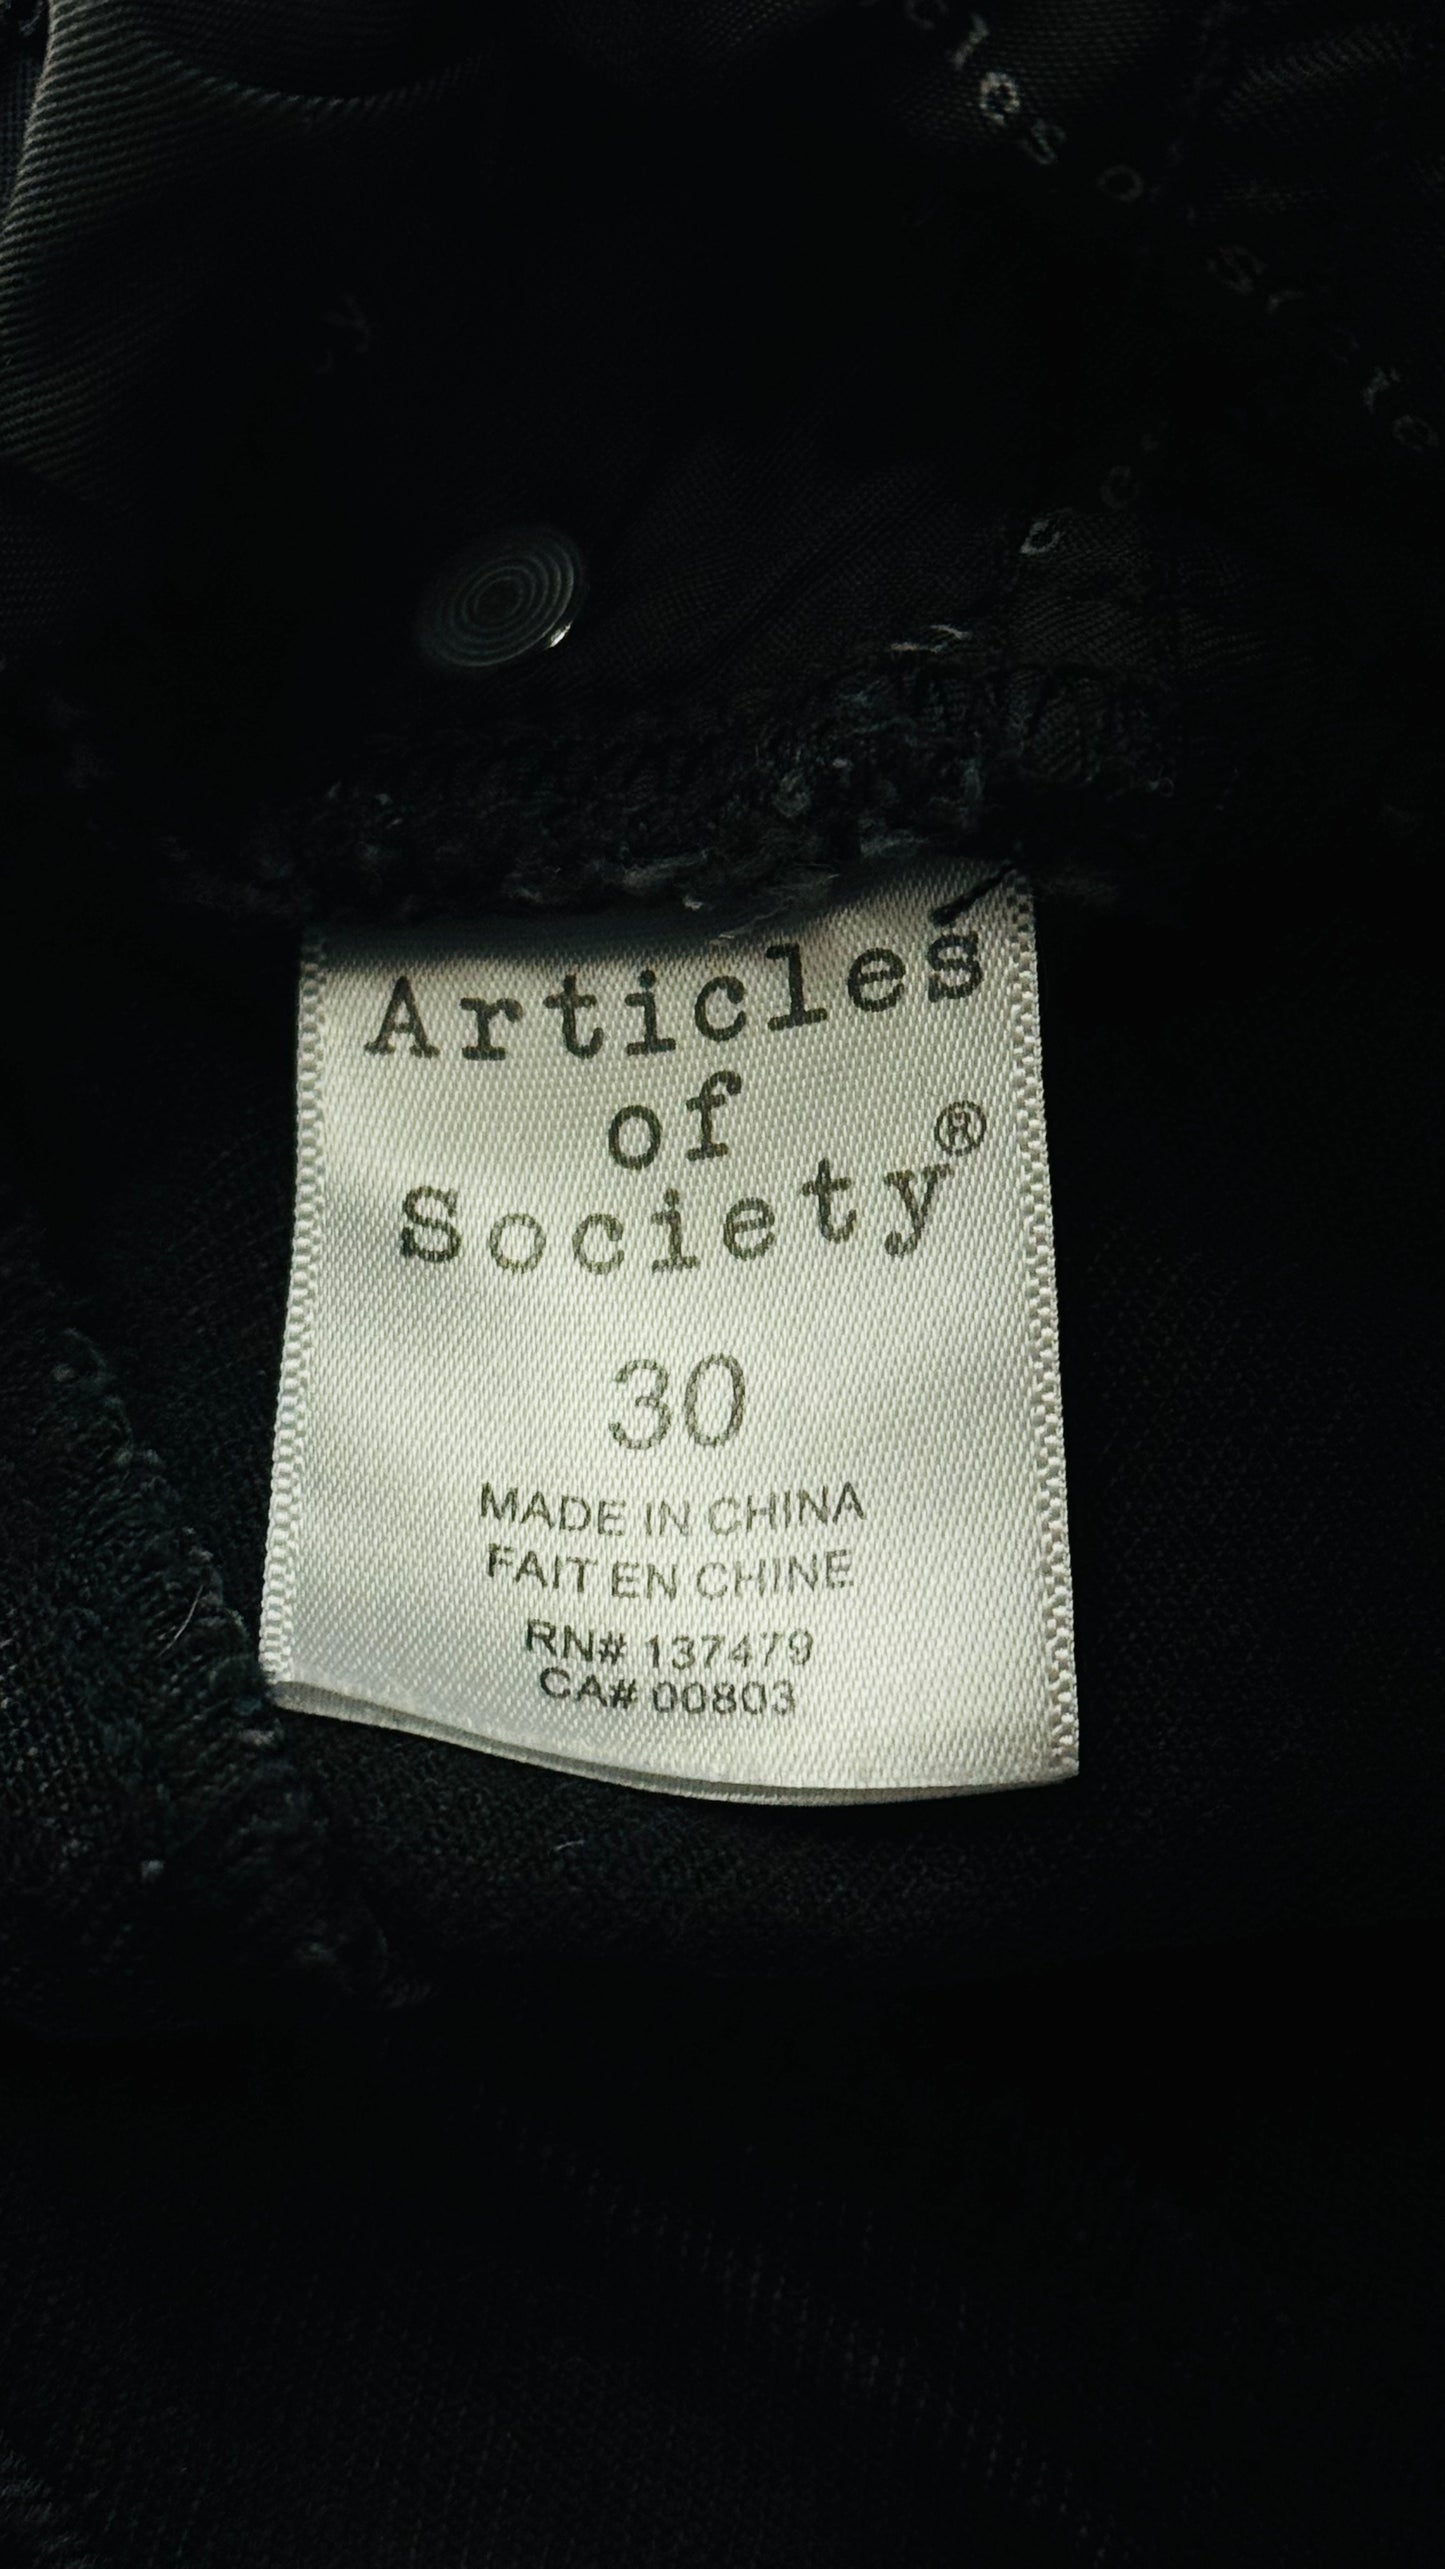 Articles of Society Women’s Denim Shorts Black - Size Medium